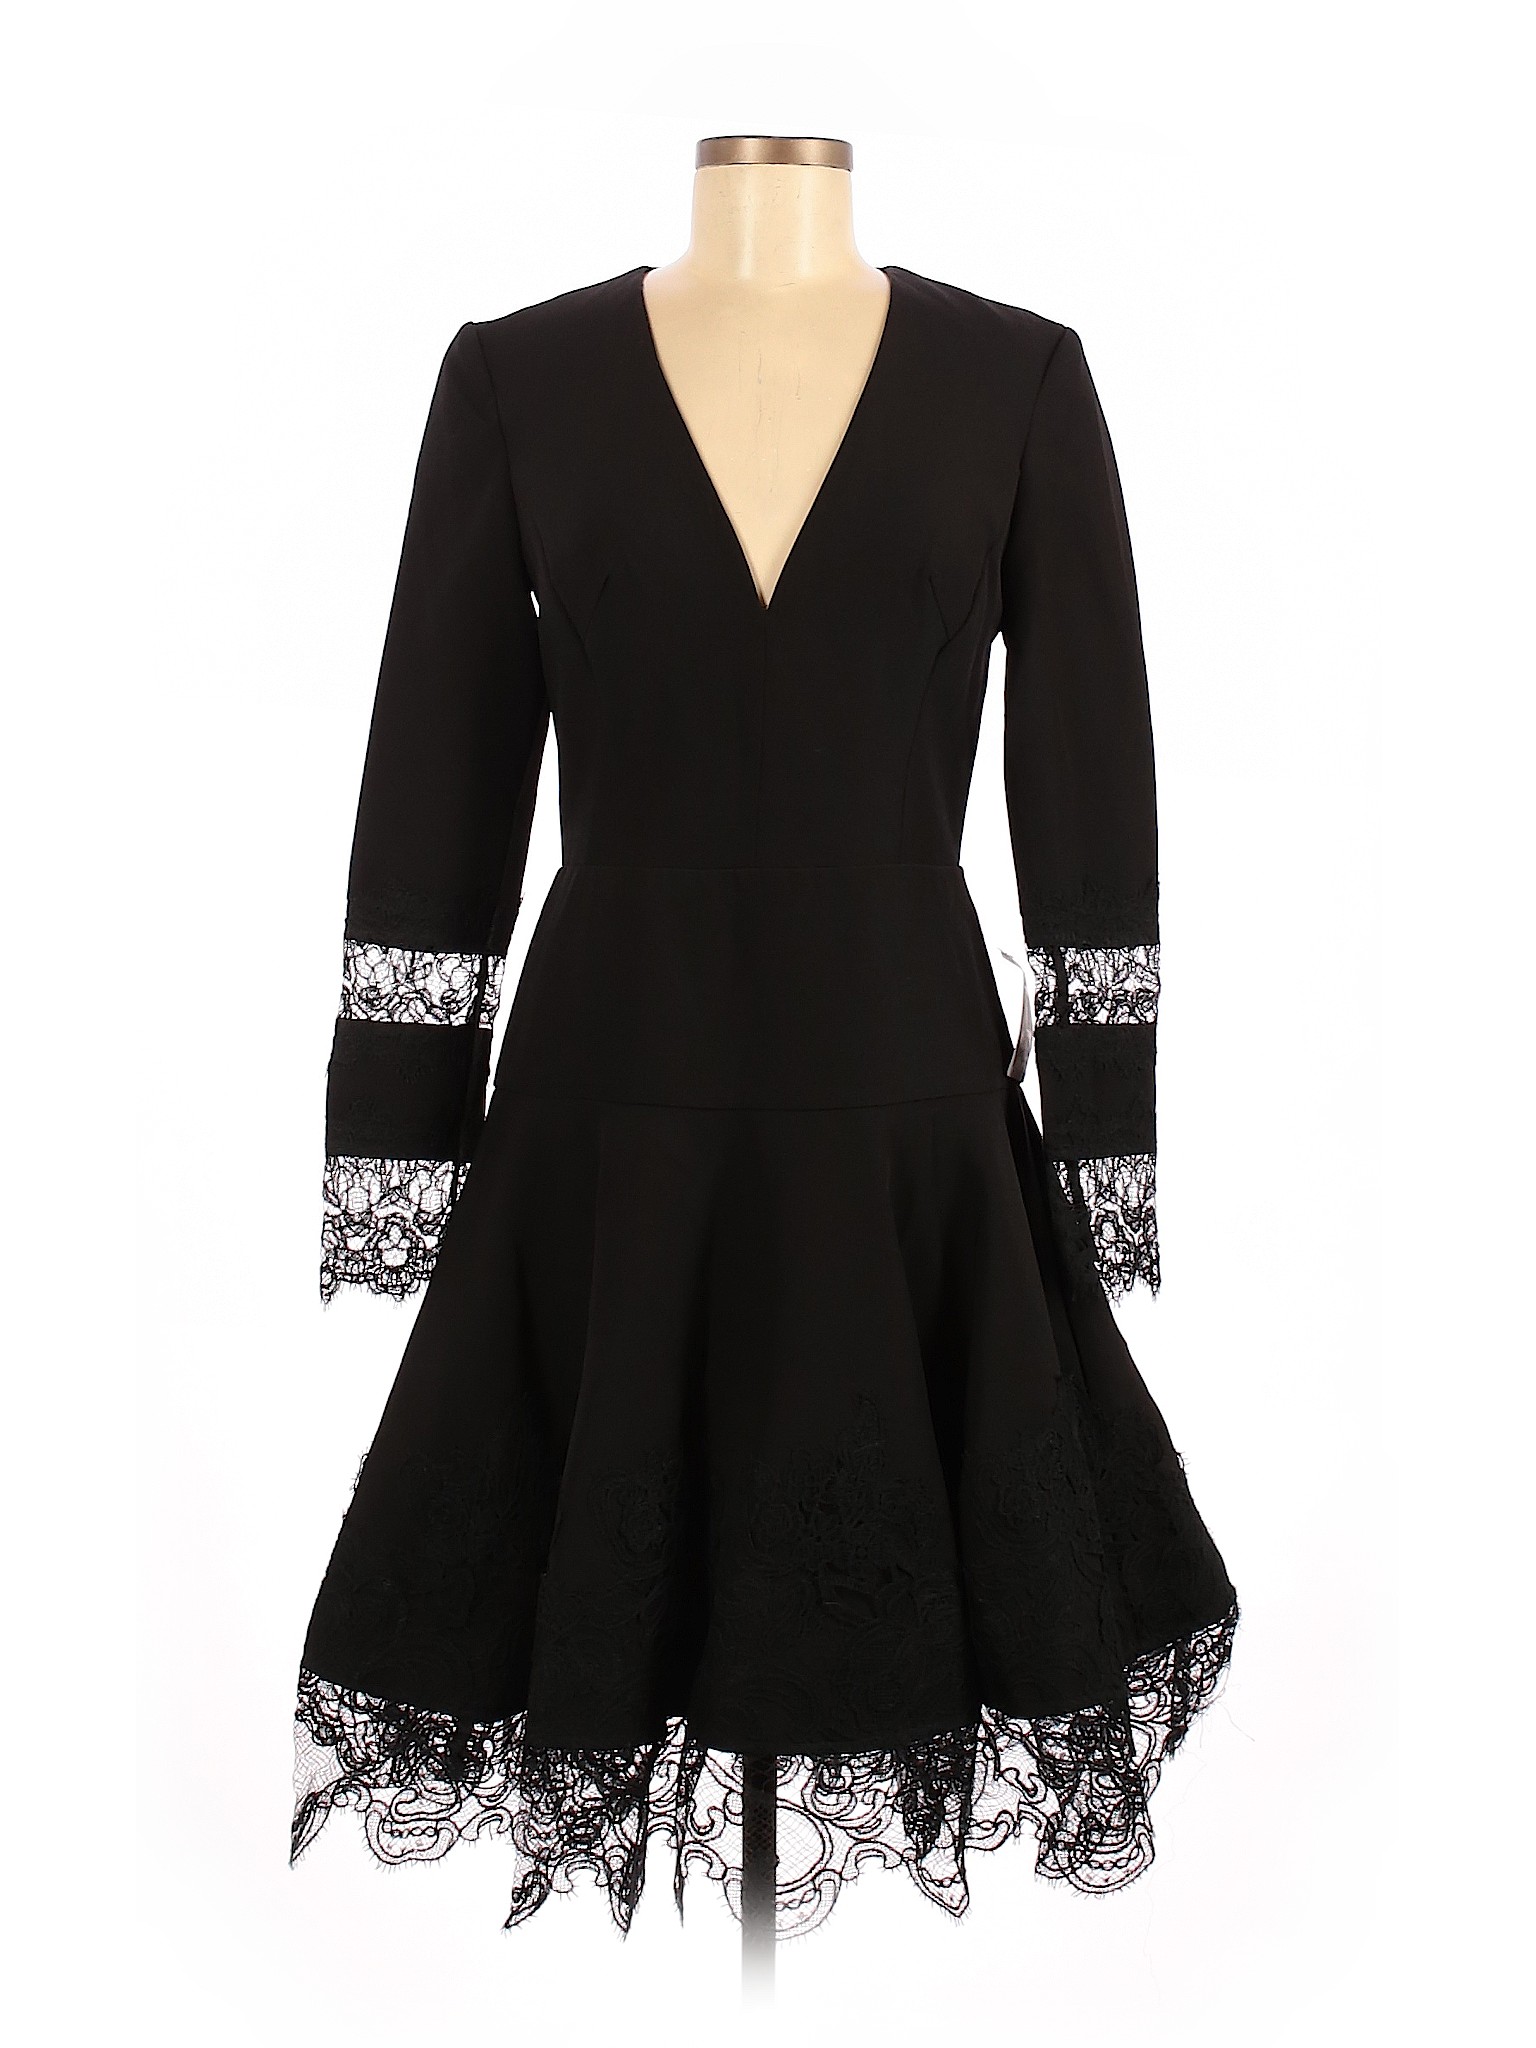 NWT Bronx & Banco Women Black Cocktail Dress M | eBay